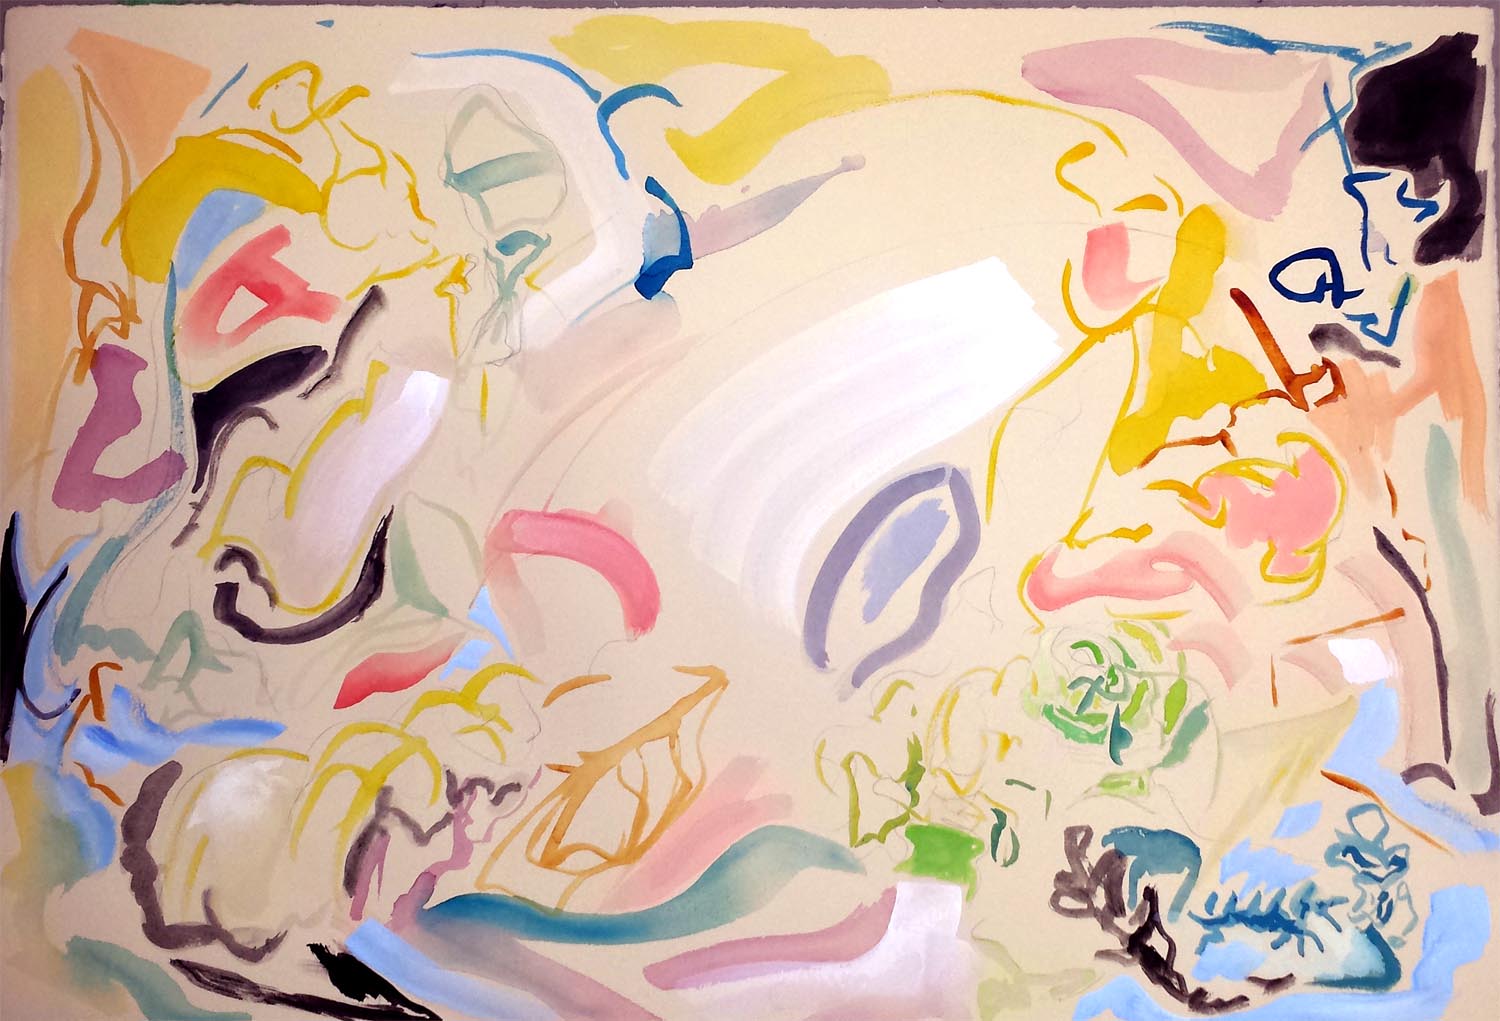 Untitled (white brushstrokes), gouache on paper, 22" x 30" 2014